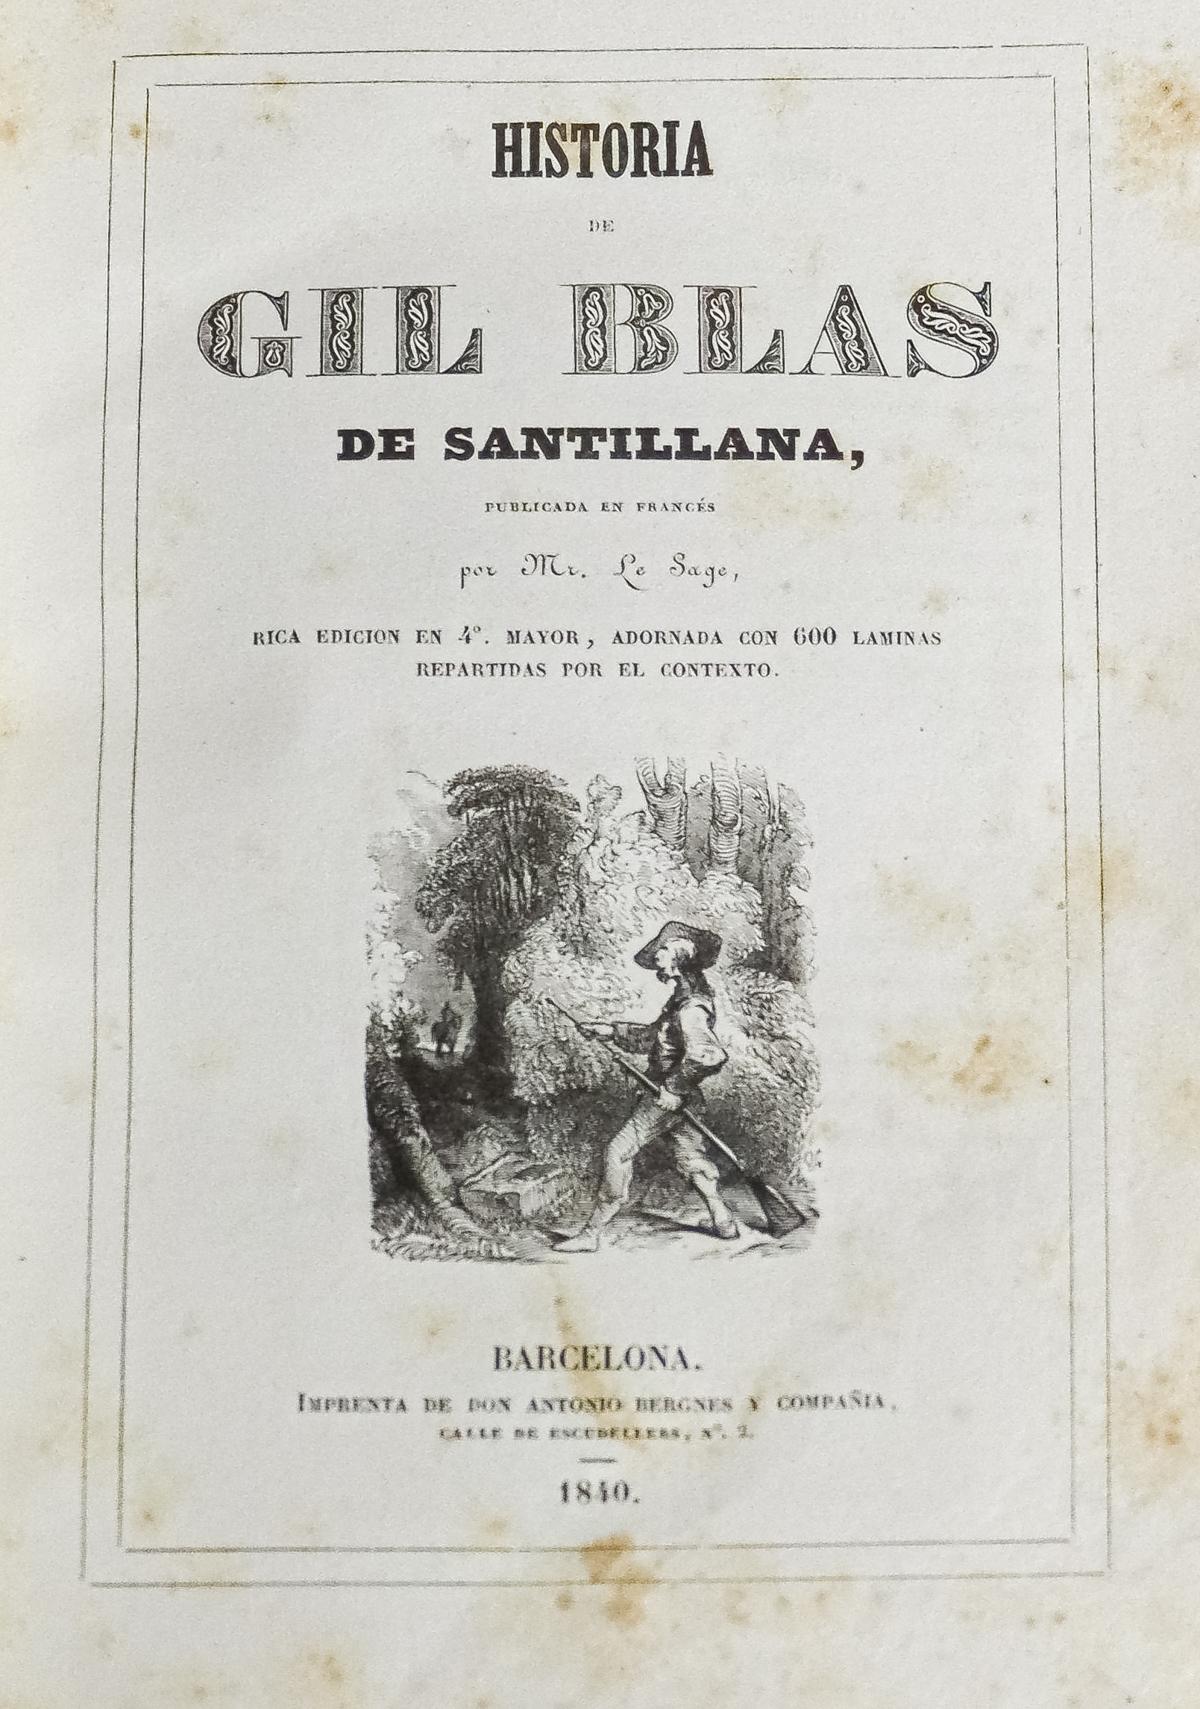 M. LESAGE "HISTORIA DE GIL BLAS DE SANTILLANA"